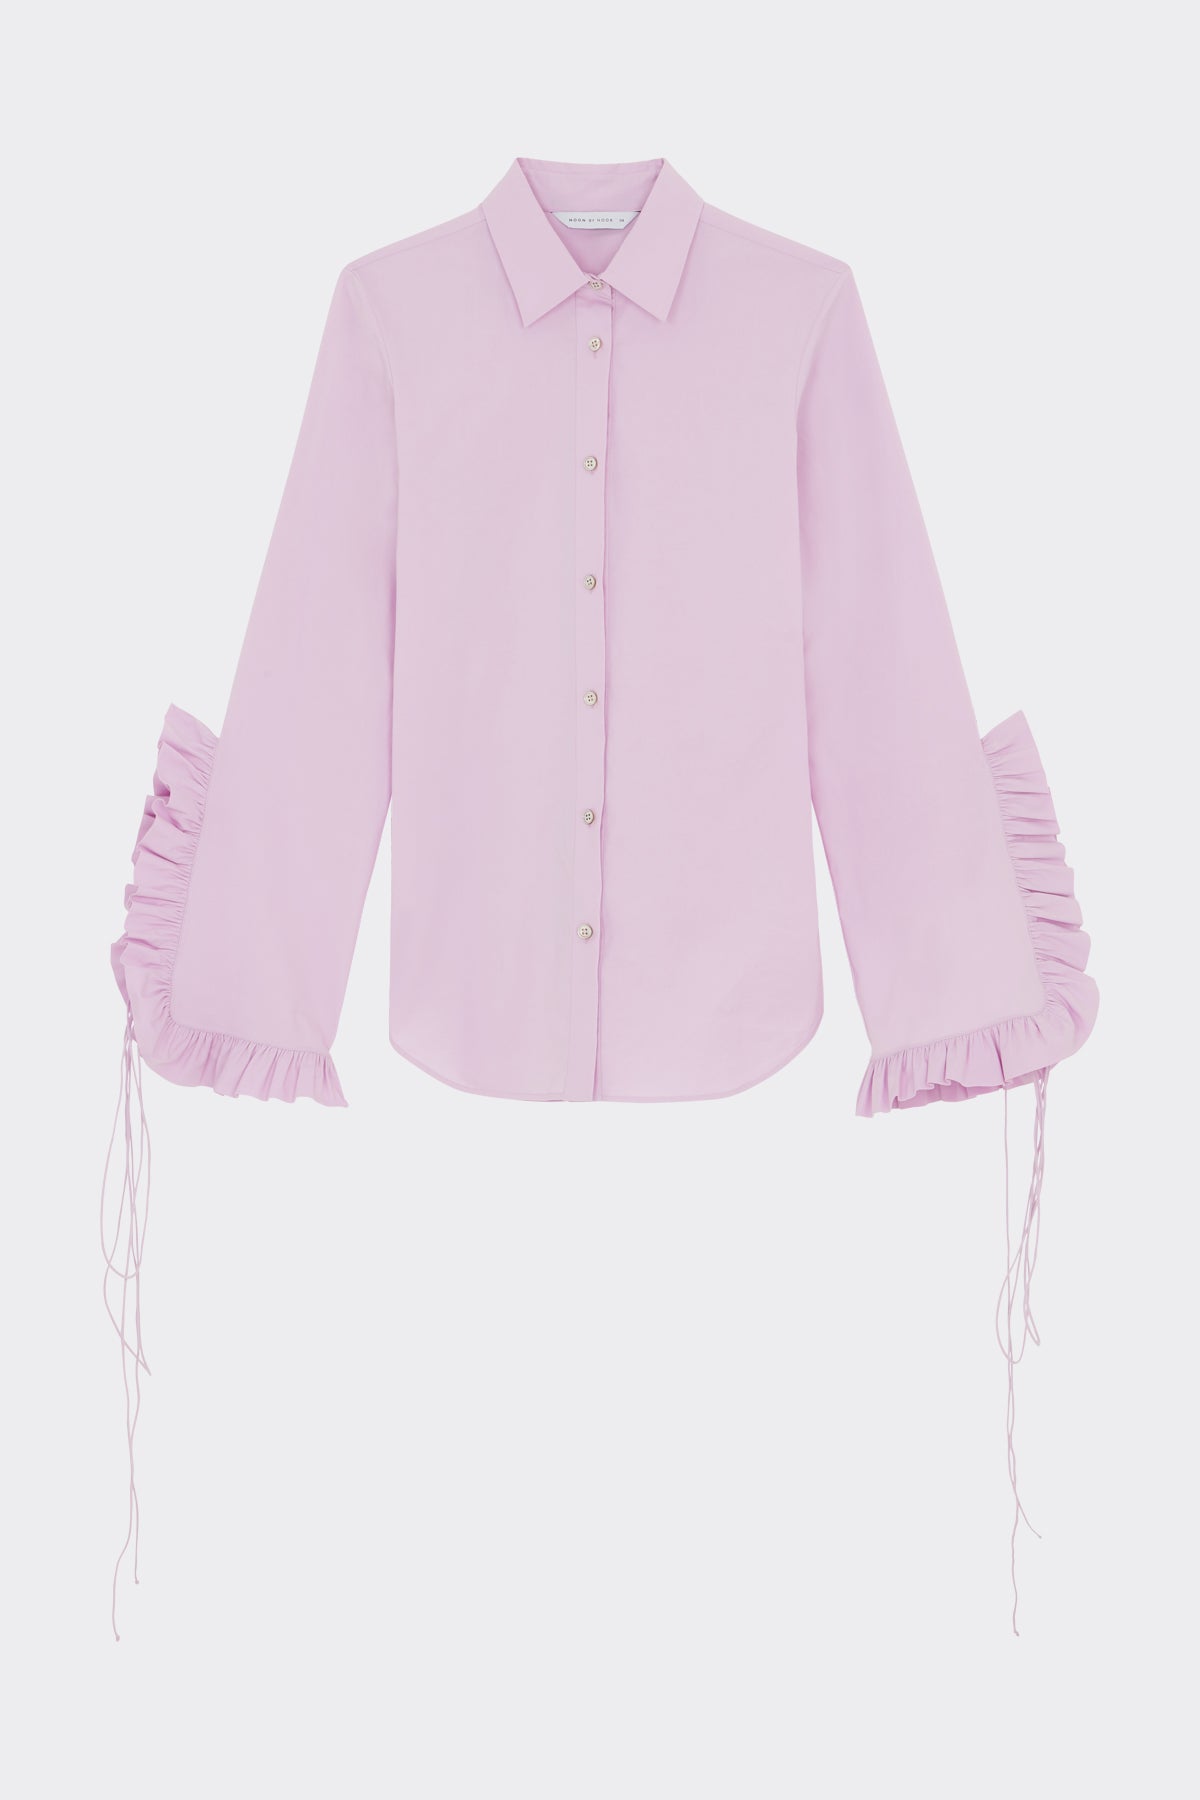 Pope Shirt in Lavender Mist| Noon by Noor